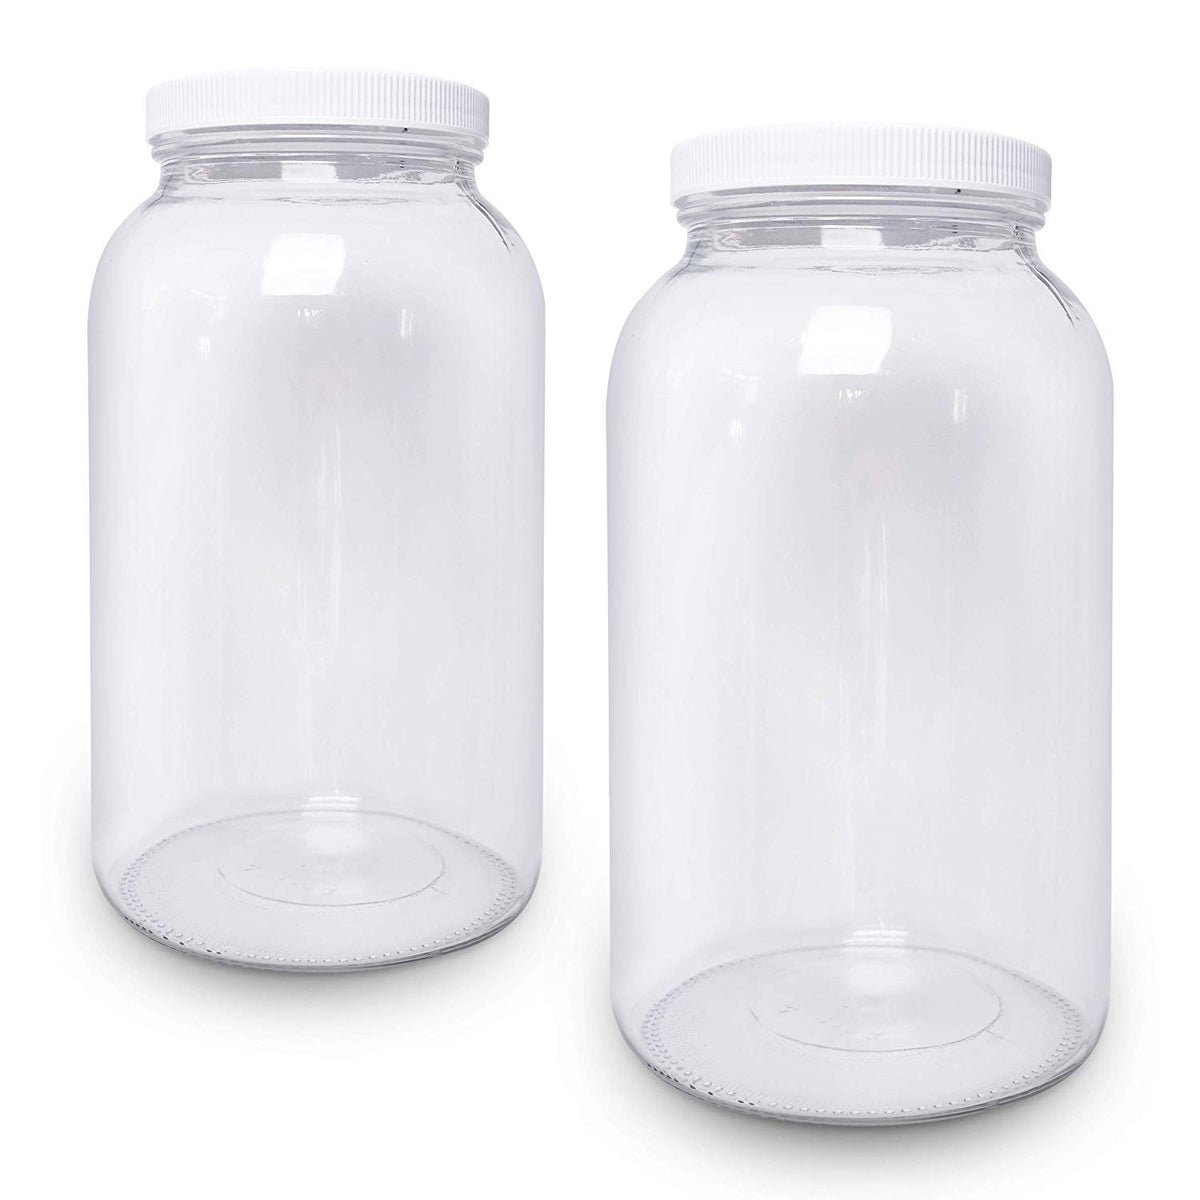 2 Pack - 1 Gallon Glass Jar w/Plastic Airtight Lid, Muslin Cloth, Rubber  Band - Made in USA, Wide Mouth Easy to Clean - BPA Free - Kombucha, Kefir,  Canning, Sun Tea, Fermentation, Food Storage